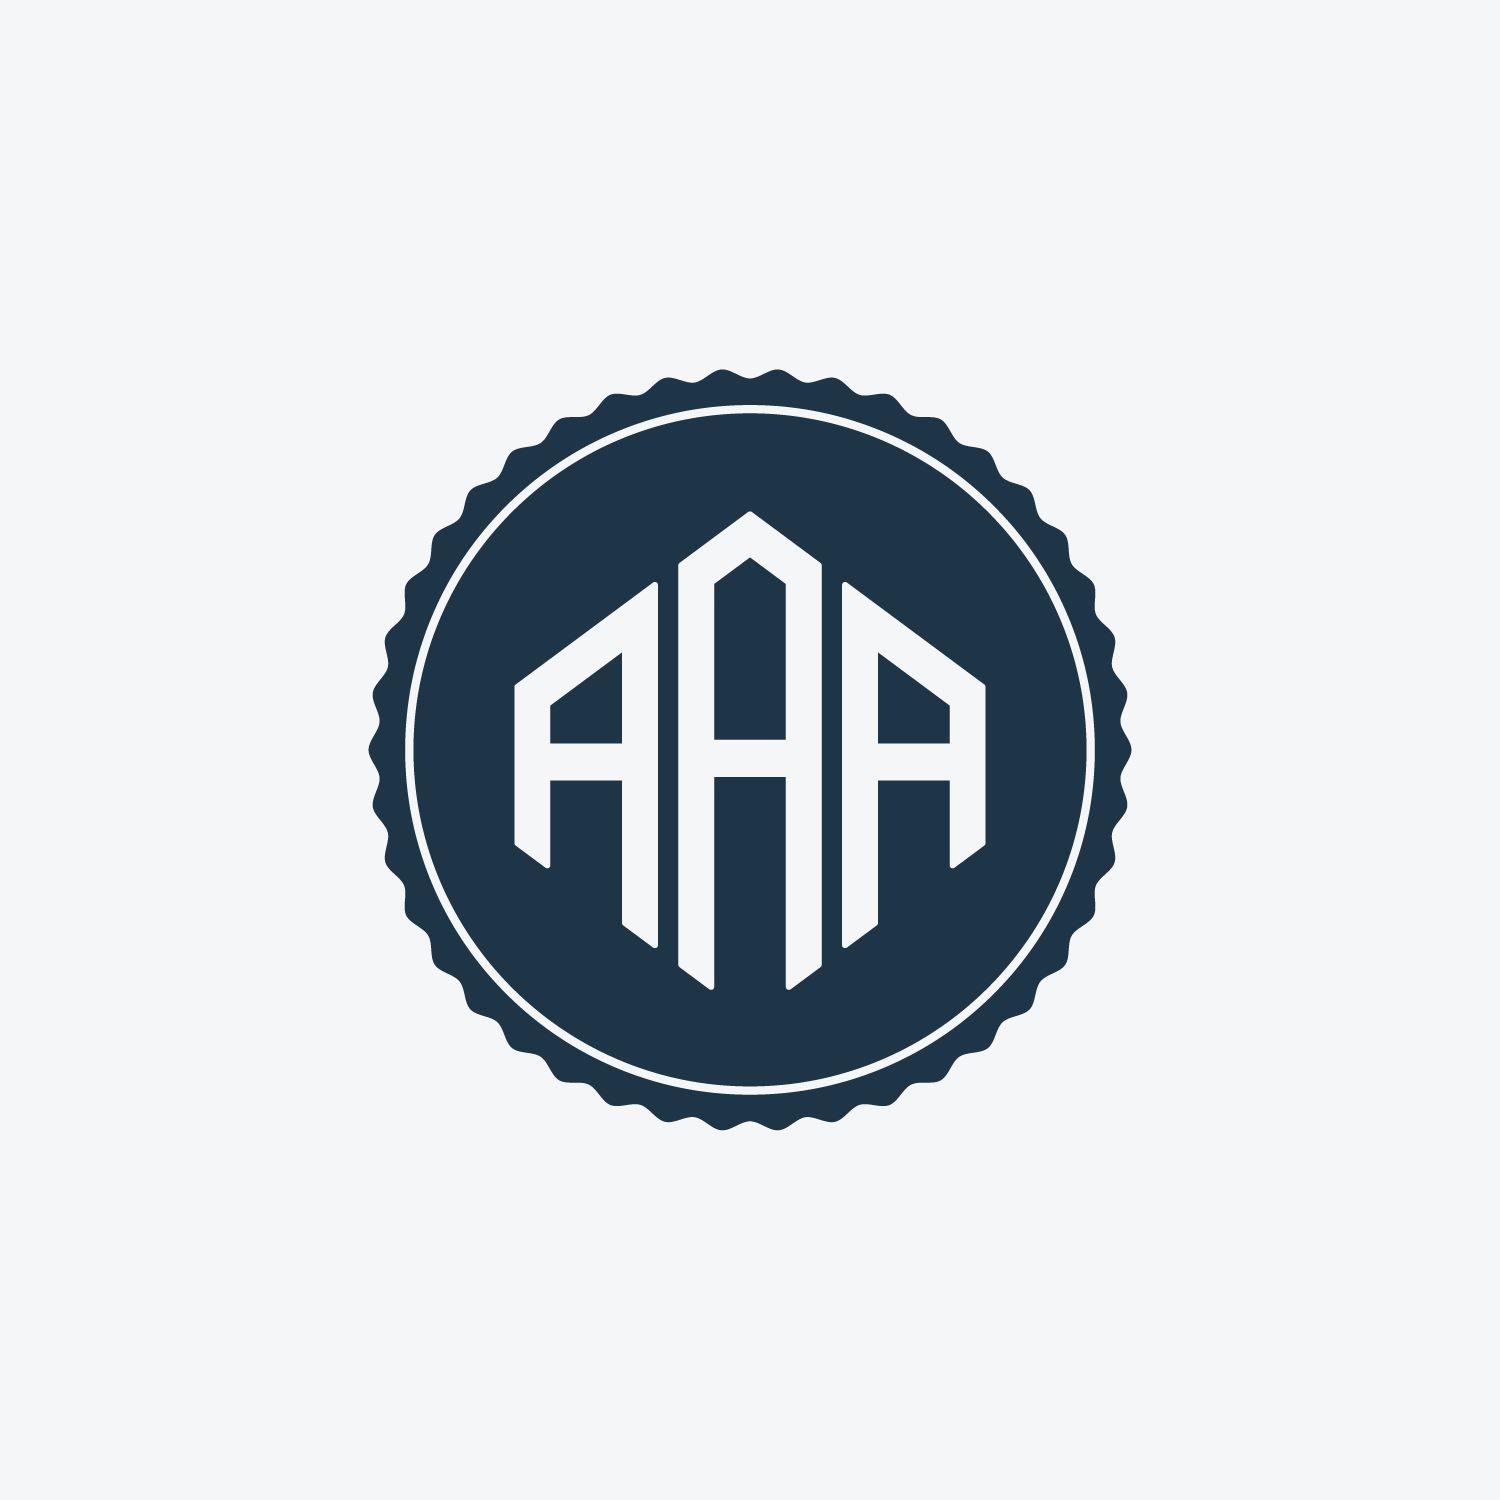 Apparel Retailer Logo - Elegant, Playful, Retail Logo Design for Can either be Anchor ...